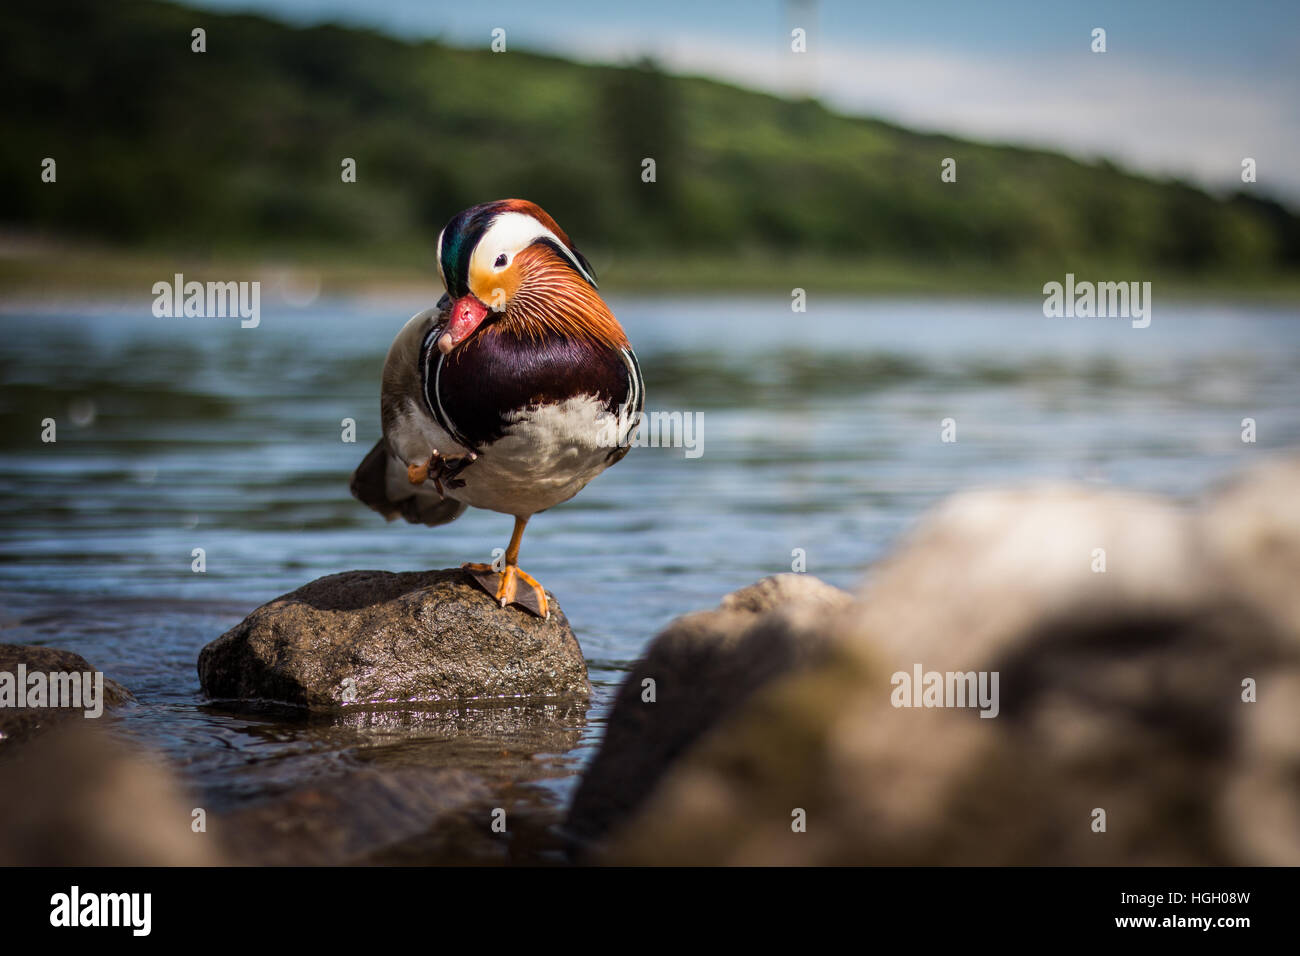 Mandarine duck outdoor Stock Photo